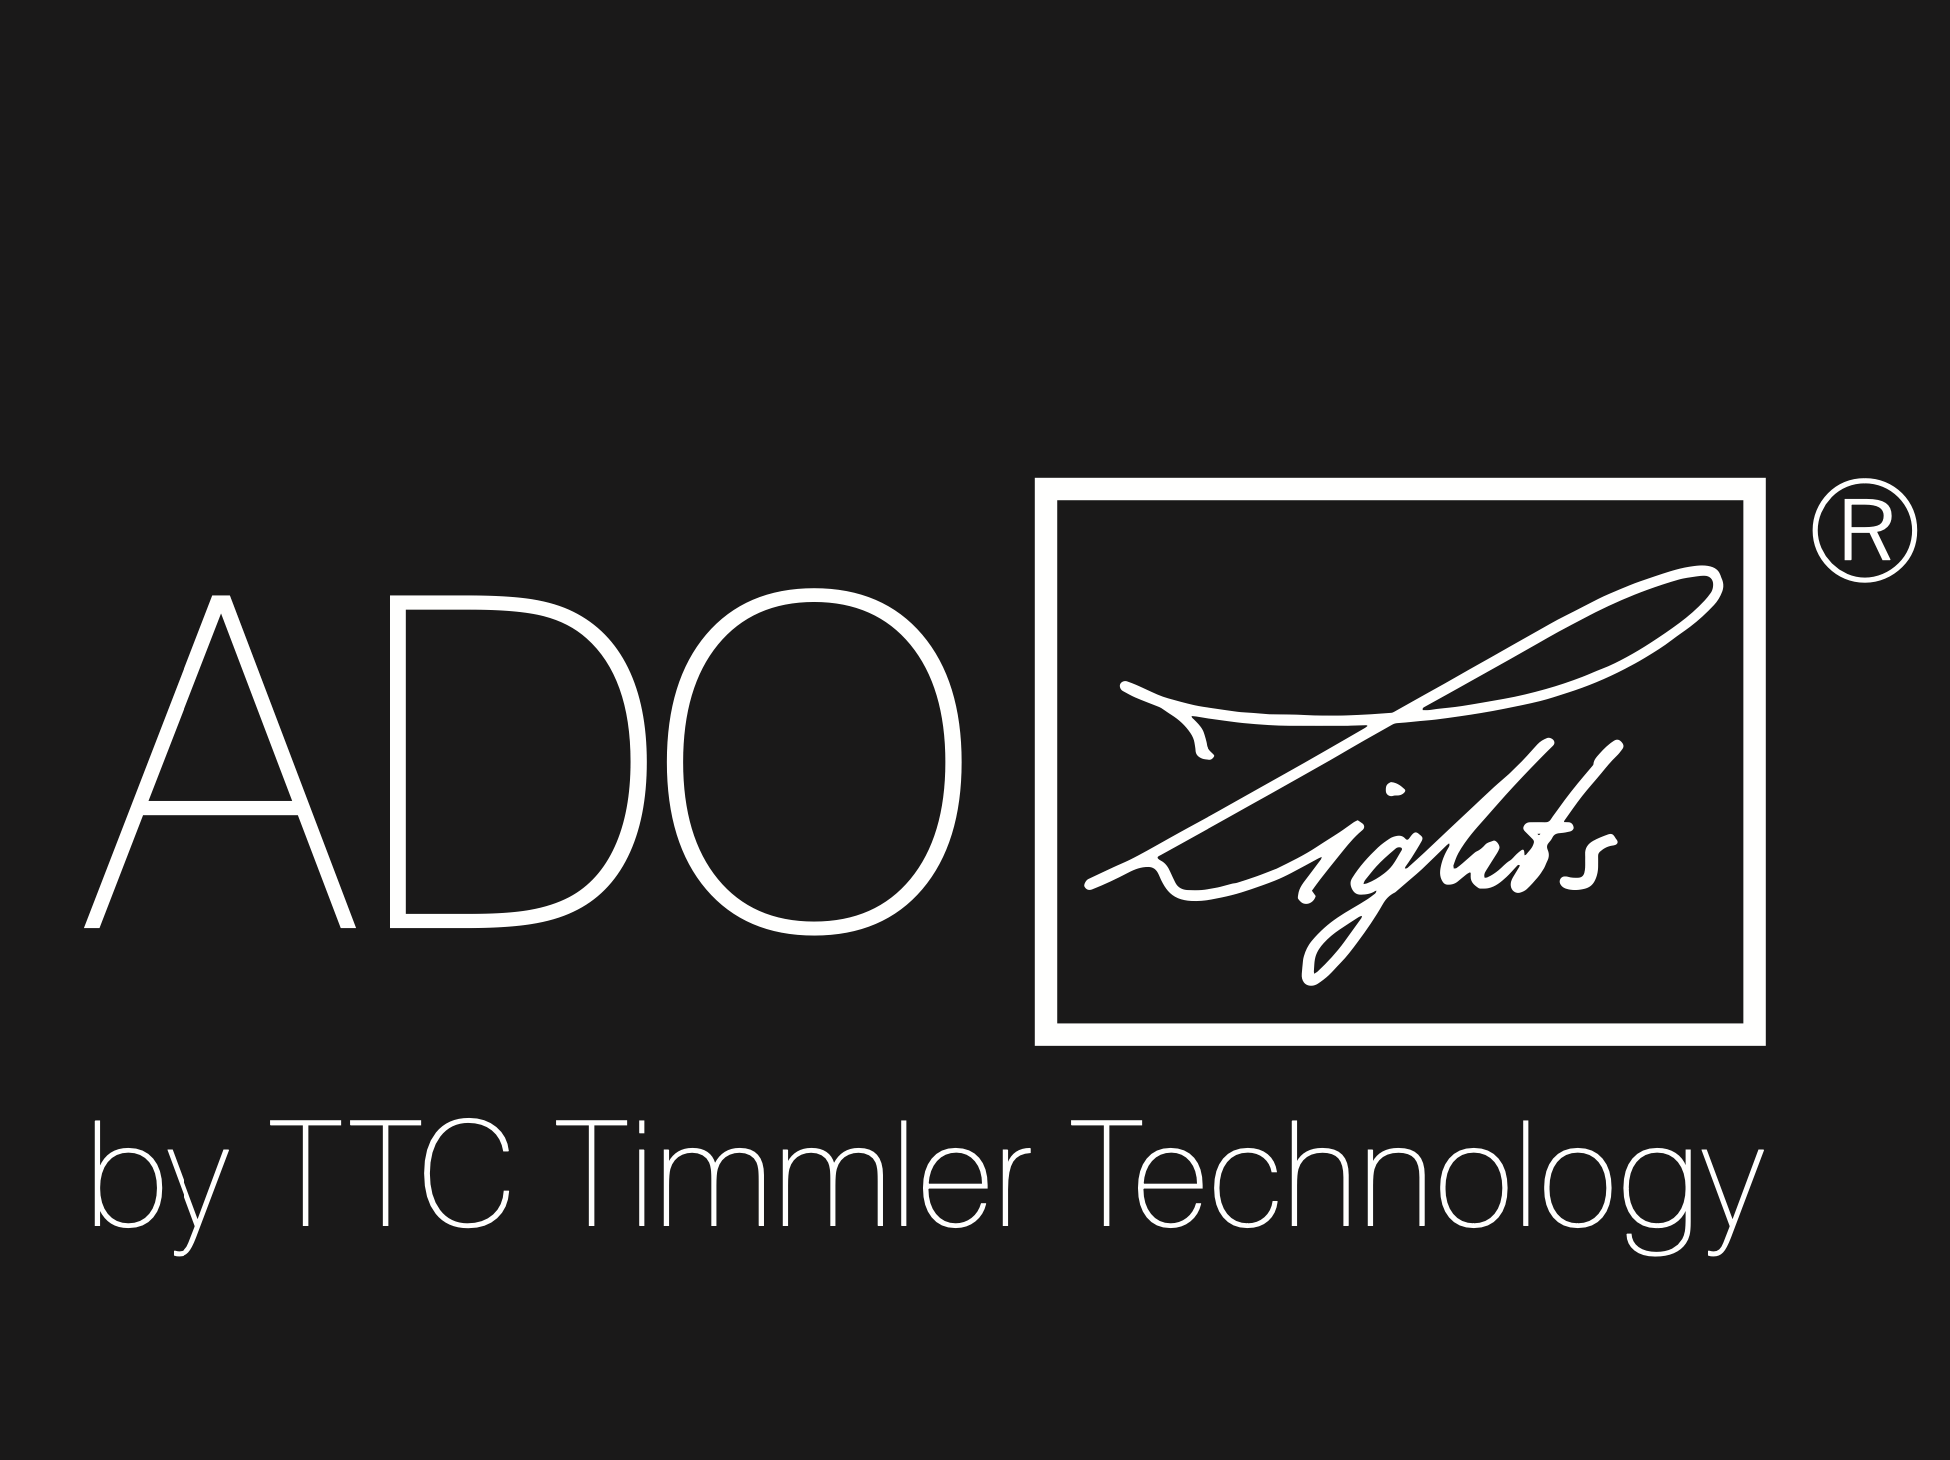 Ado Light GmbH